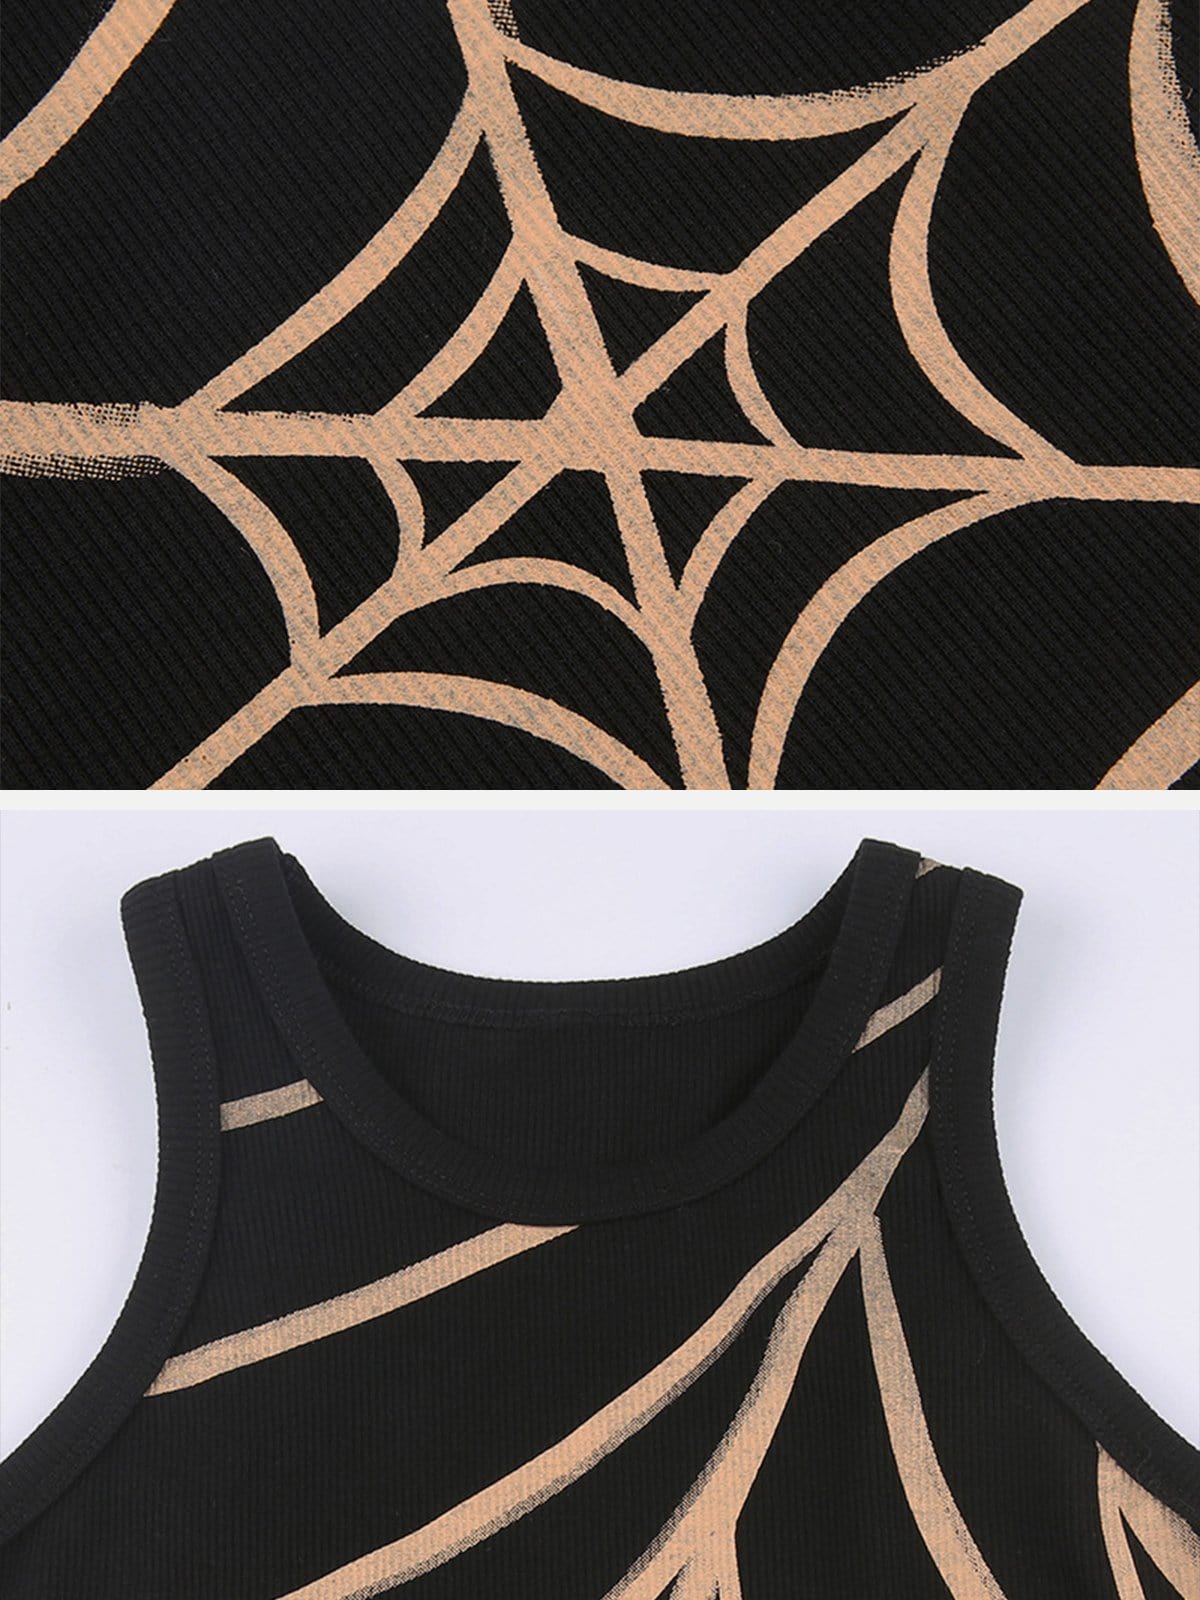 NEV Spider Web Print Vest